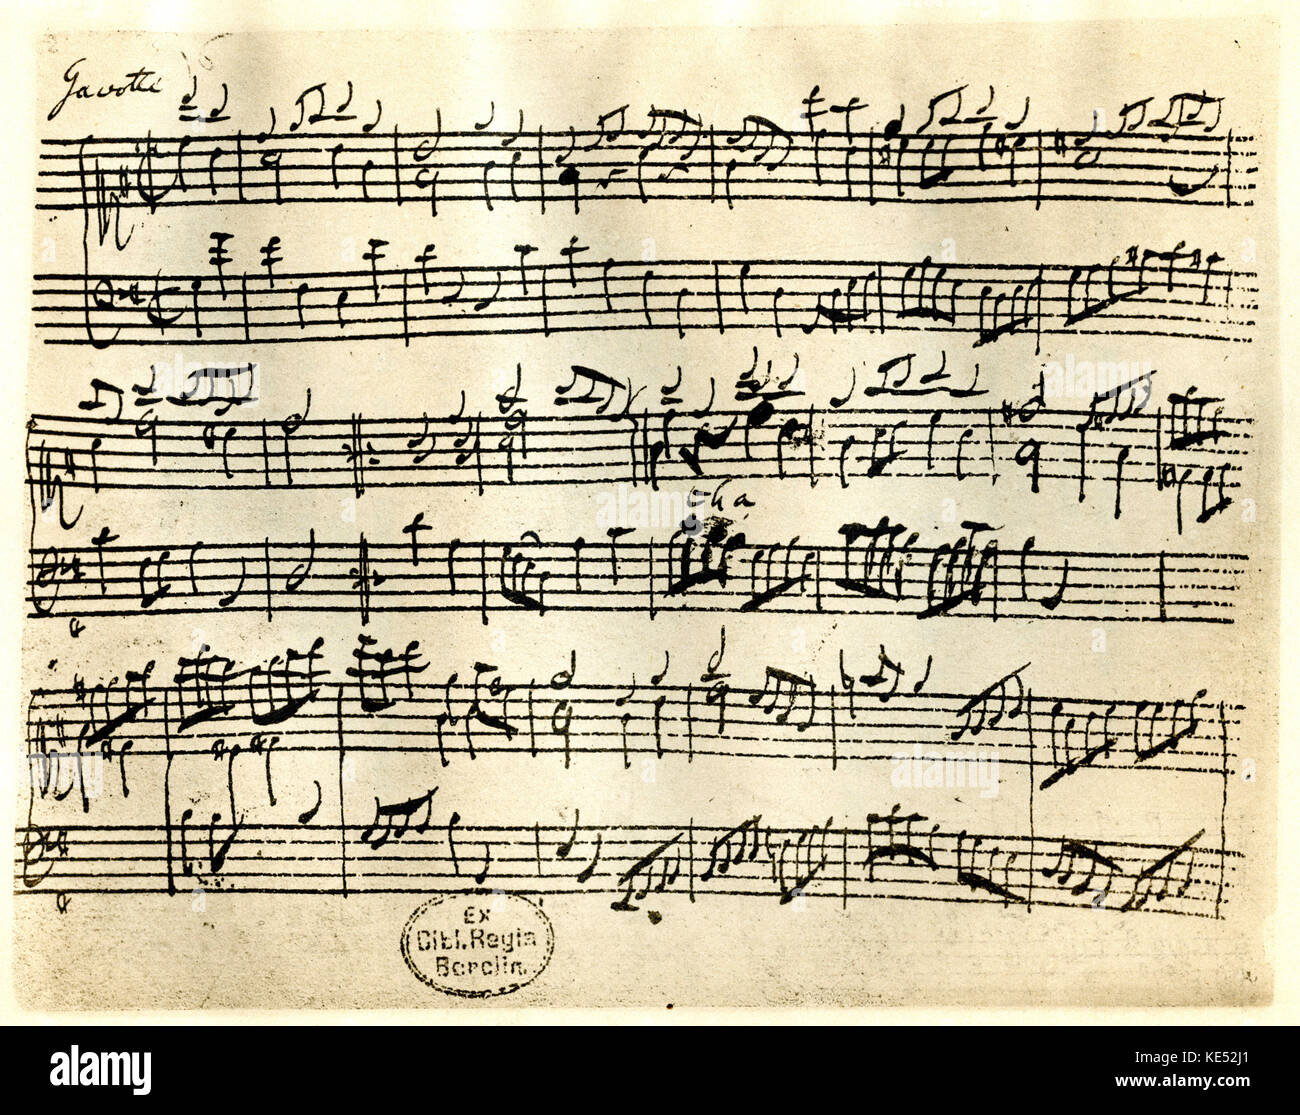 Johann Sebastian Bach 's handwritten manuscript score for the gavotte of his French Suite No. 5 in G major. BWV 816.  JSB, German composer: 21 March 1685 - 28 July 1750. Stock Photo